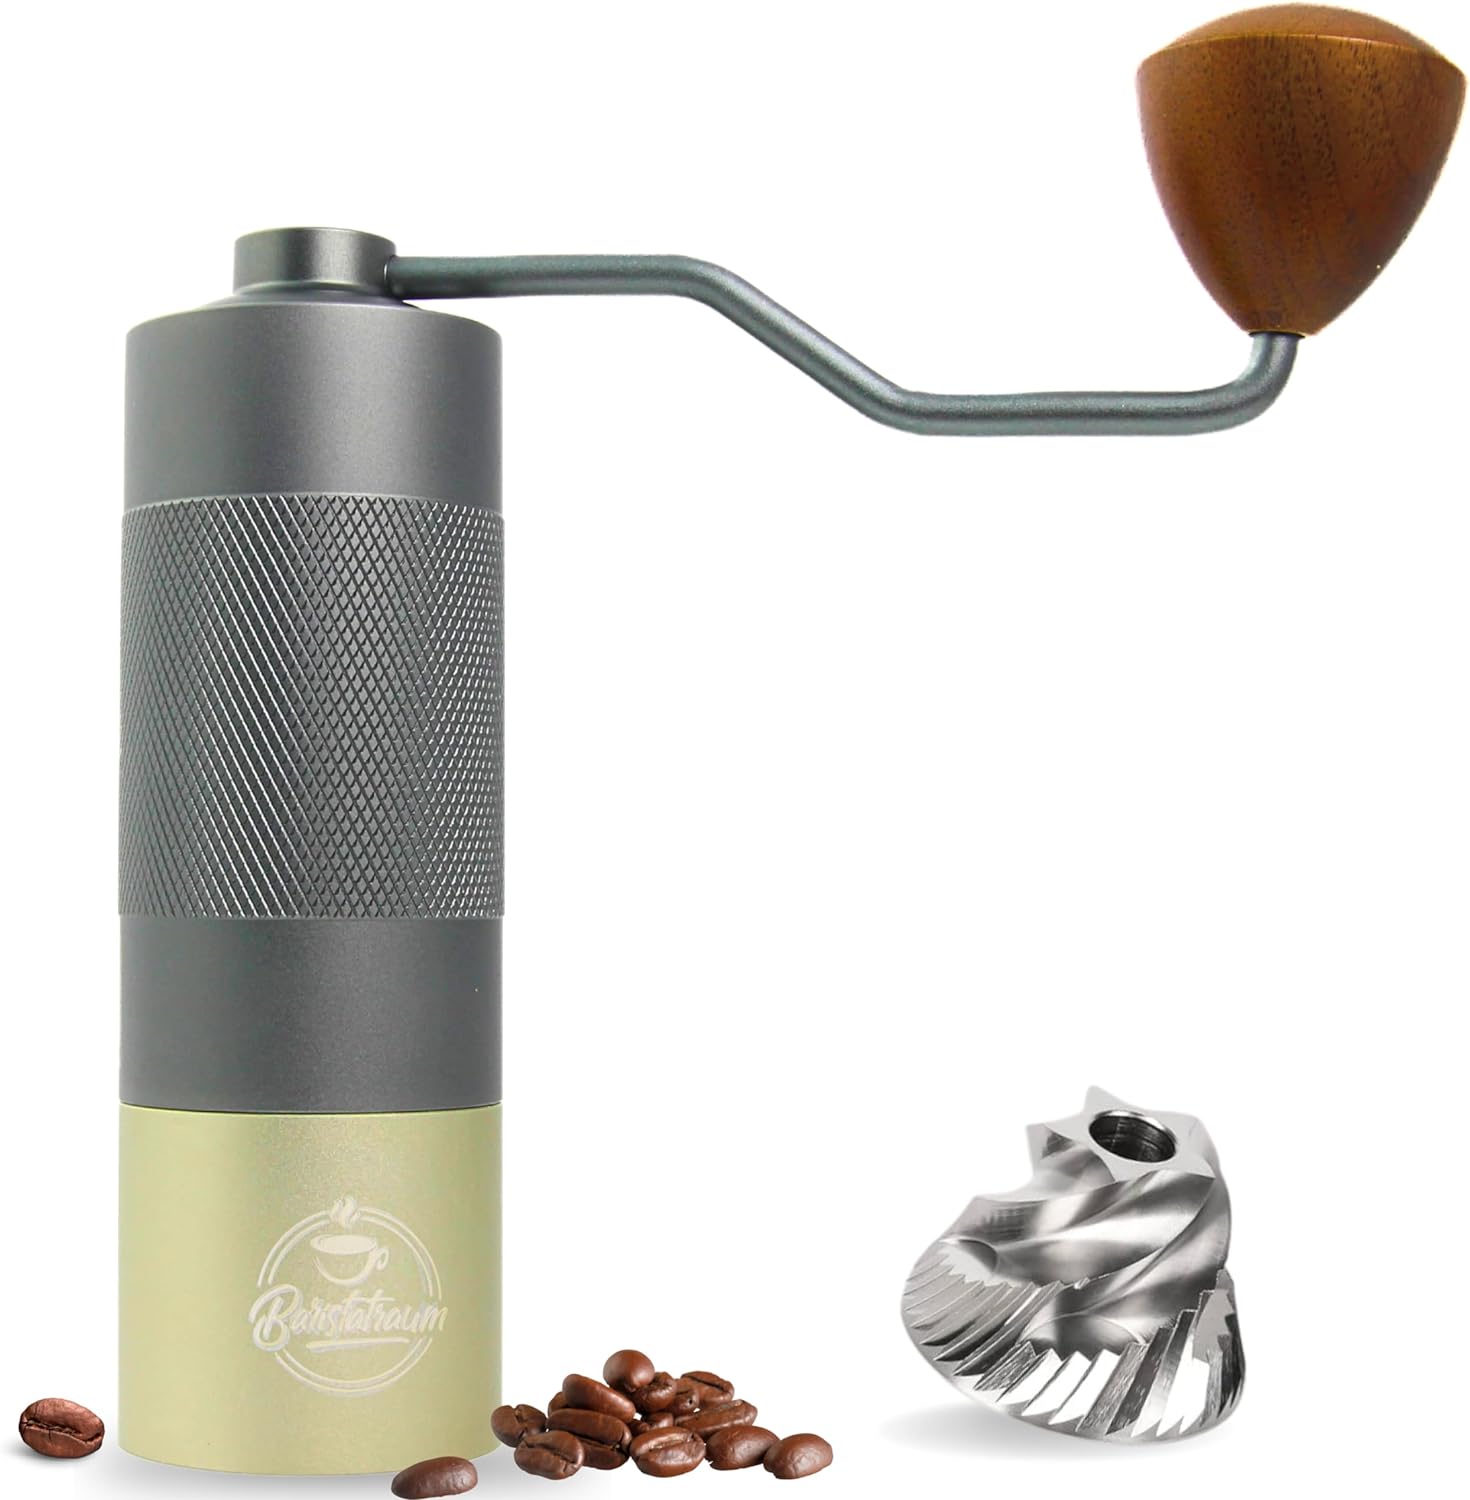 Barista dream - Manual Coffee Grinder - Premium Coffee Grinder with Stainless Steel Hexagon Cone Grinder - Plastic -Free Espresso Grinder